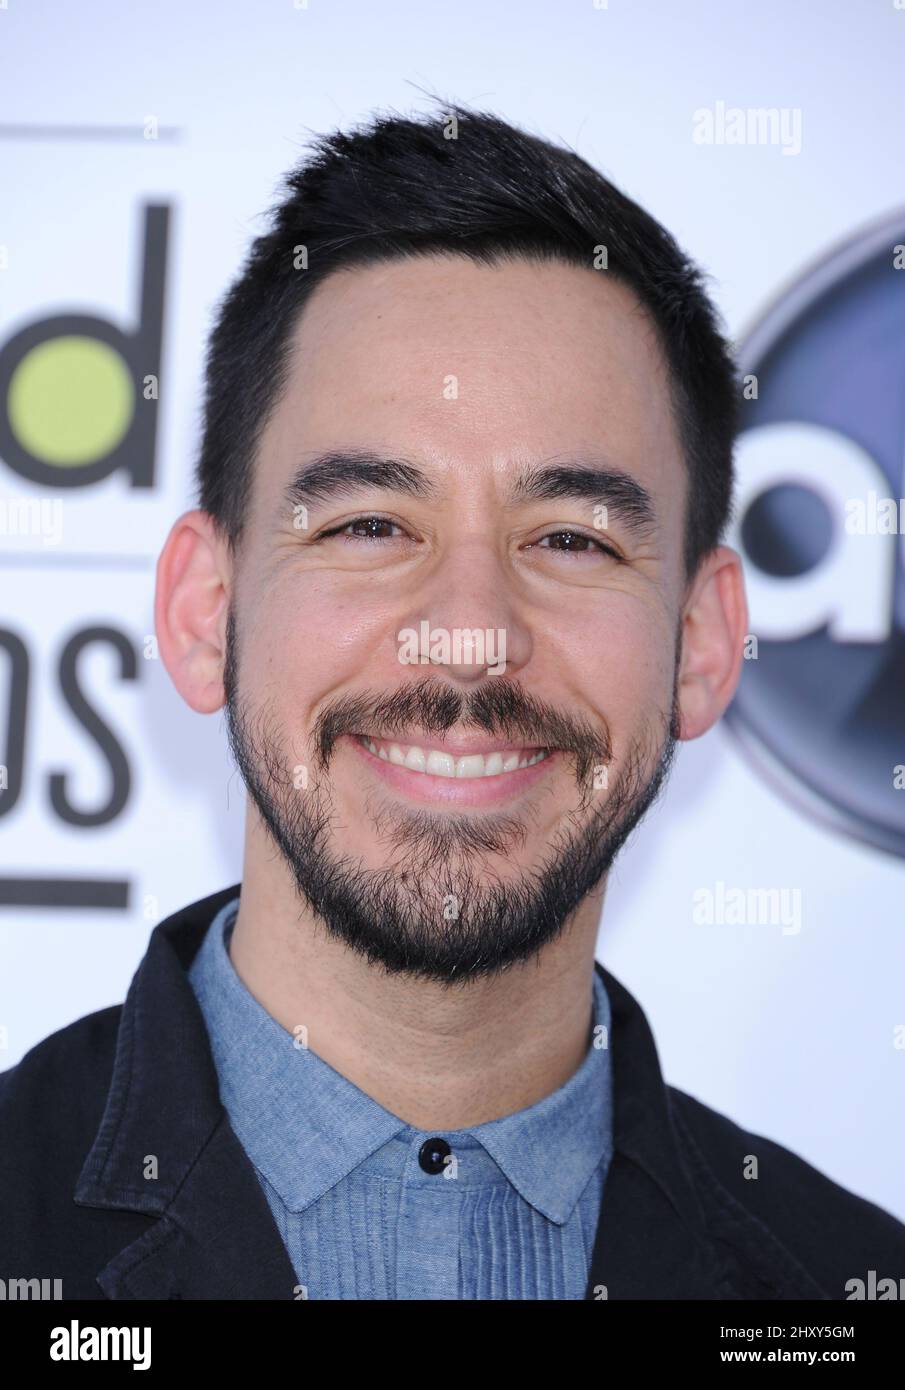 Mike Shinoda during the 2012 Billboard Awards held at MGM Grand Garden Arena, Las Vegas Stock Photo